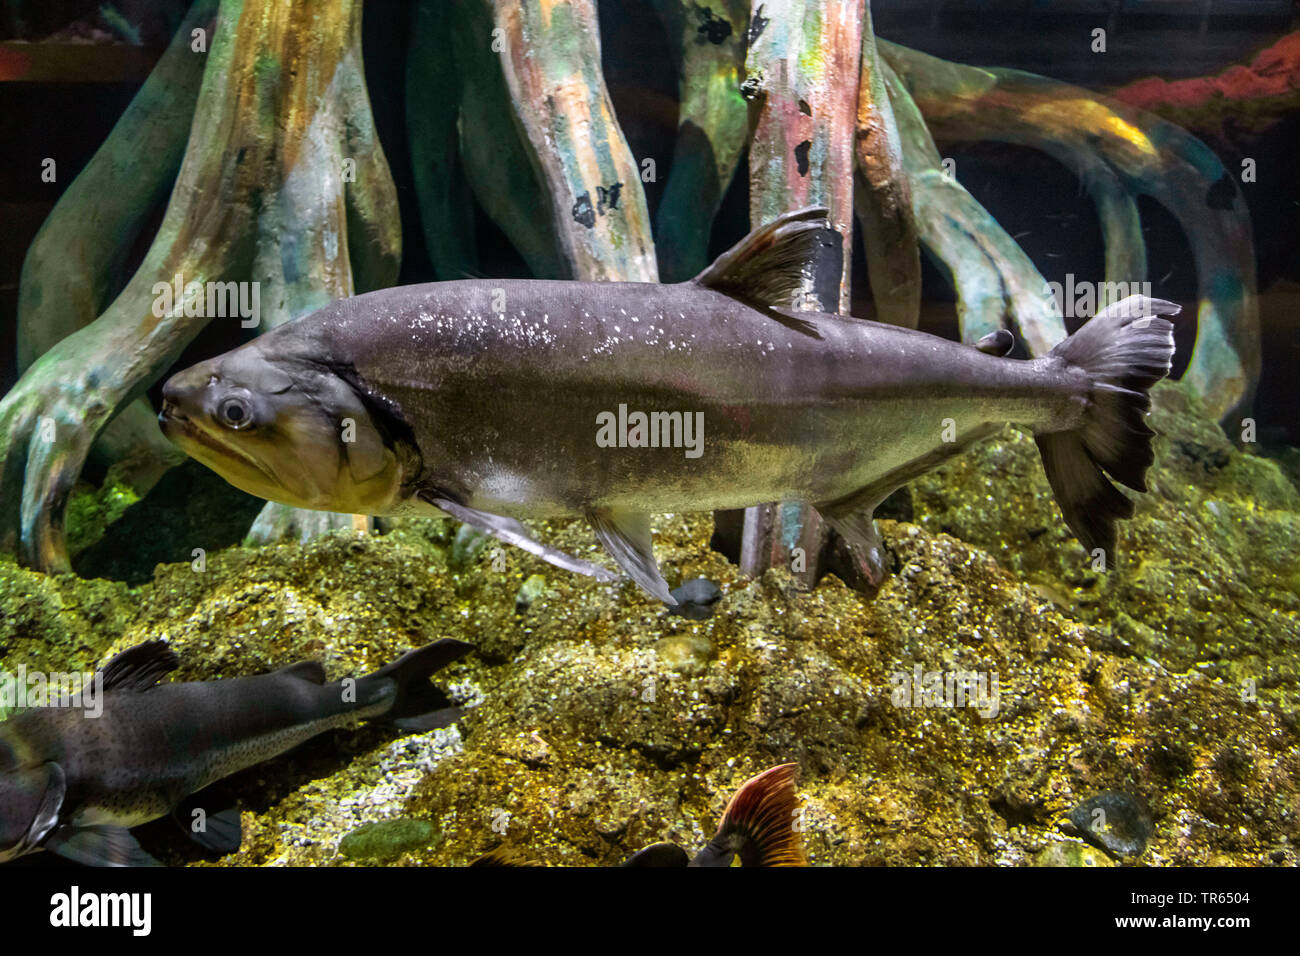 Hund Zahn Characin, Vampir Fisch (Hydrolycus scomberoides), Seitenansicht, USA, Arizona Stockfoto